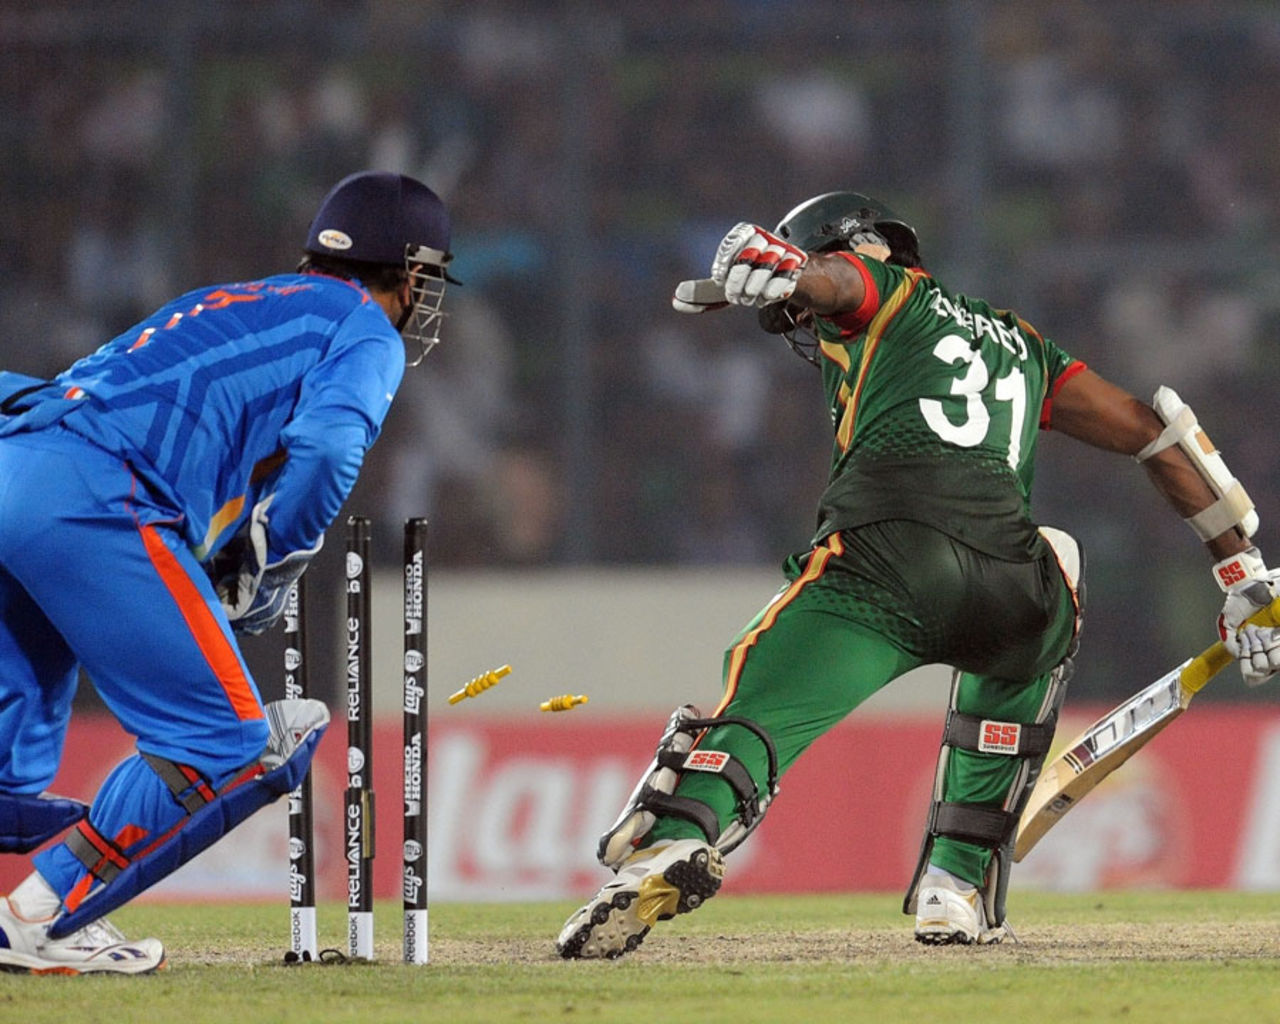 MS Dhoni stumps Junaid Siddique for 37, Bangladesh v India, Group B, World Cup 2011, Mirpur, February 19, 2011